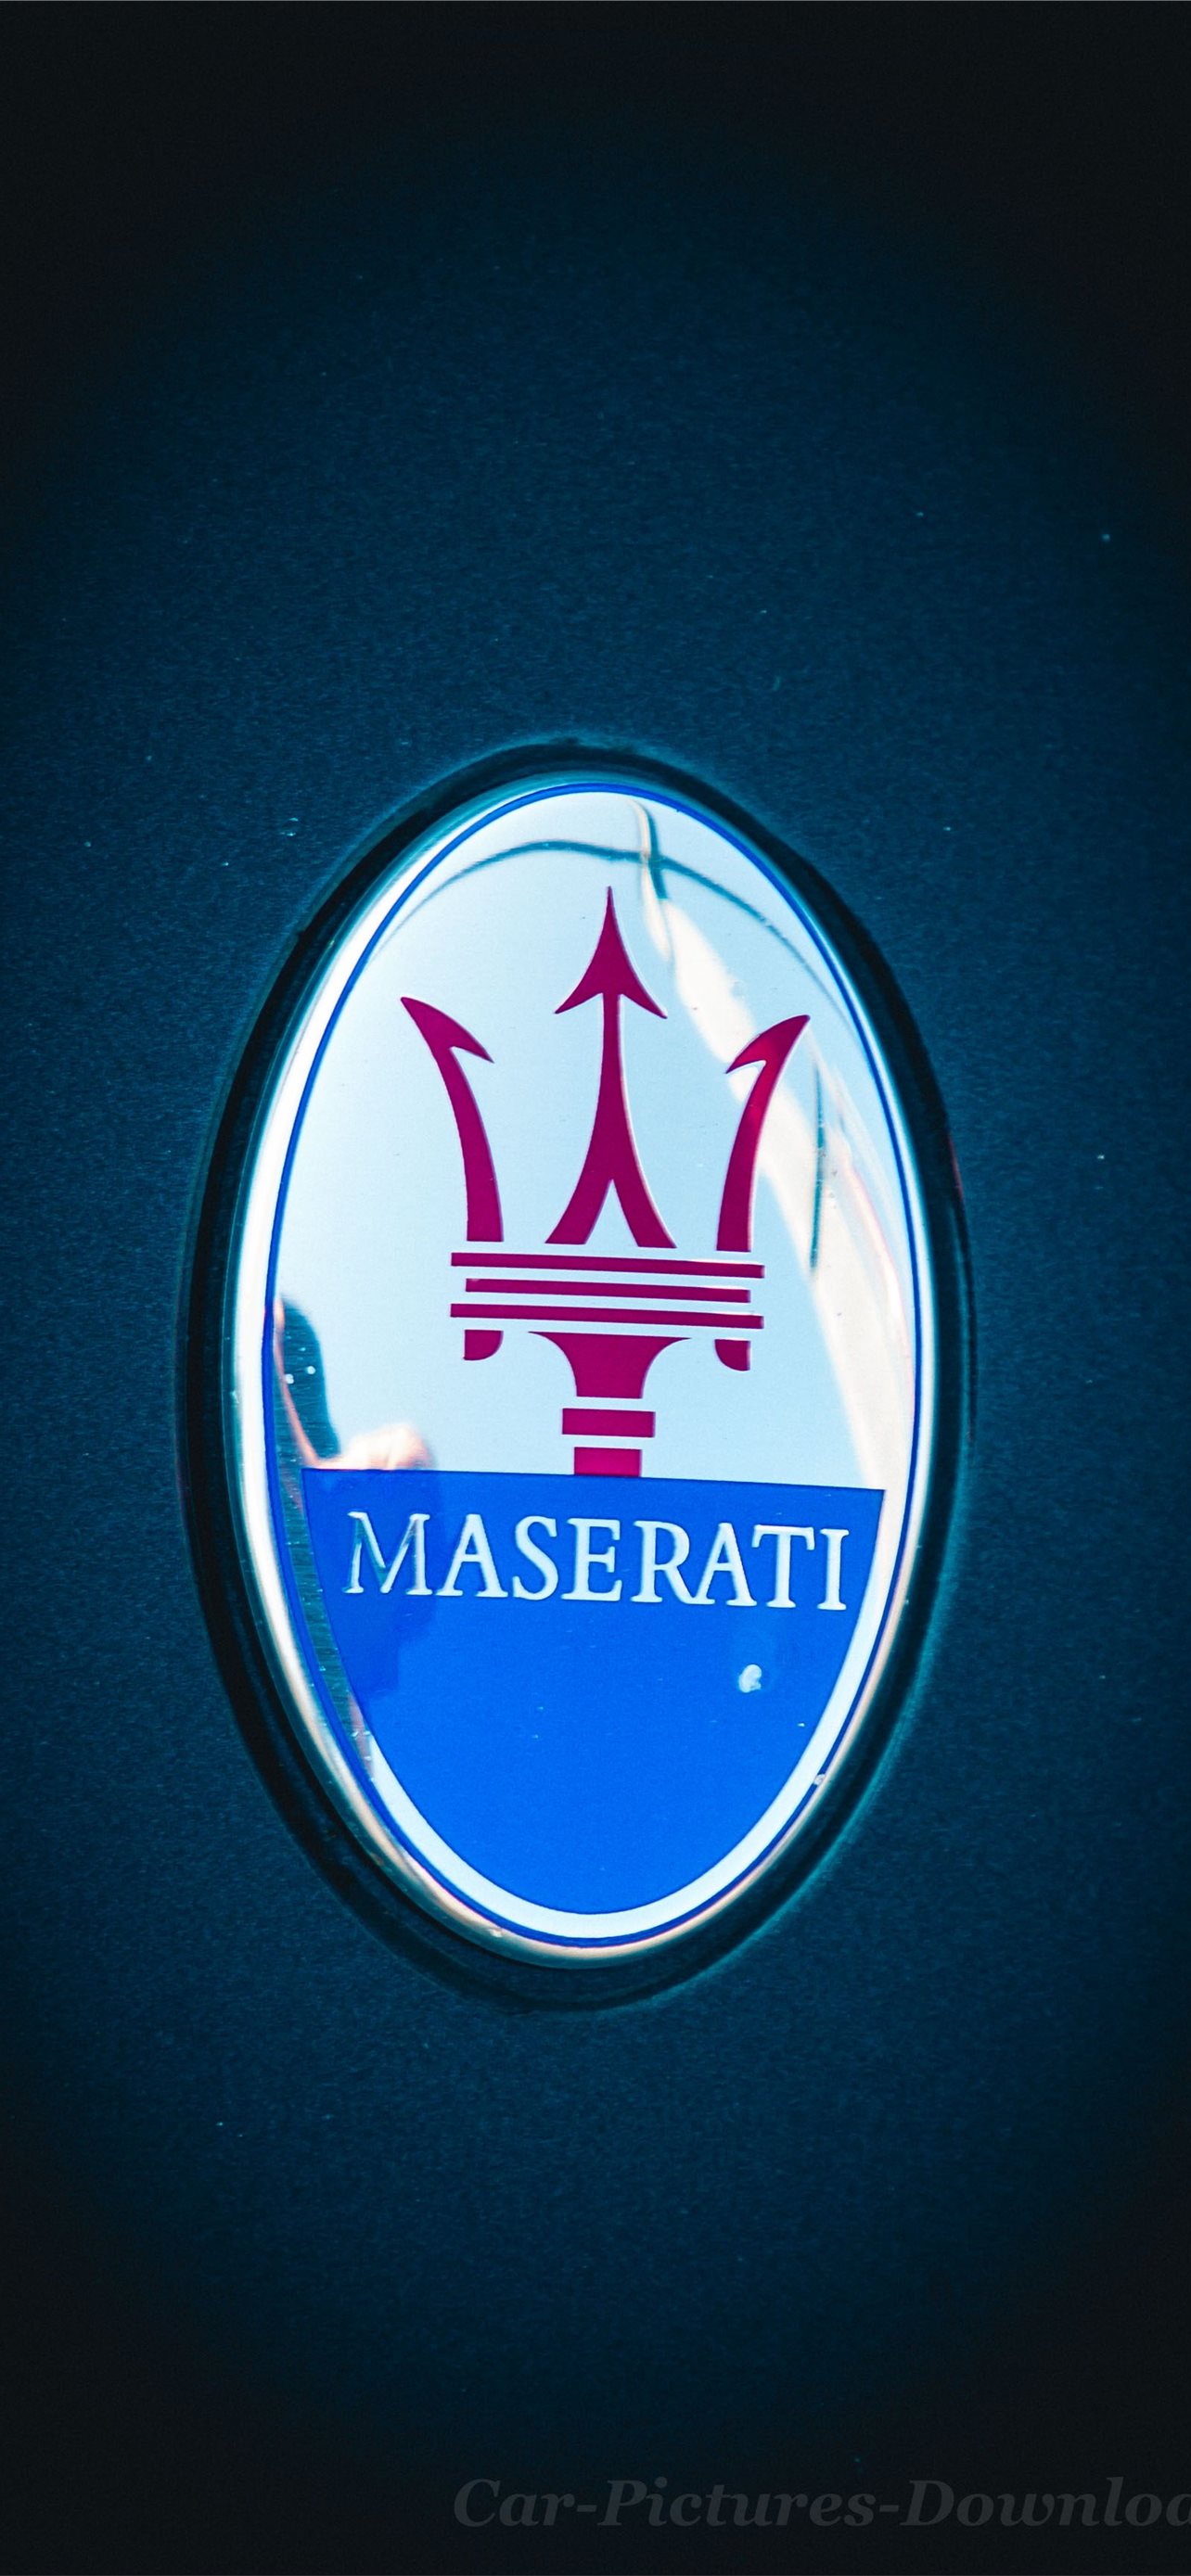 Maserati Logo Image Wallpapers